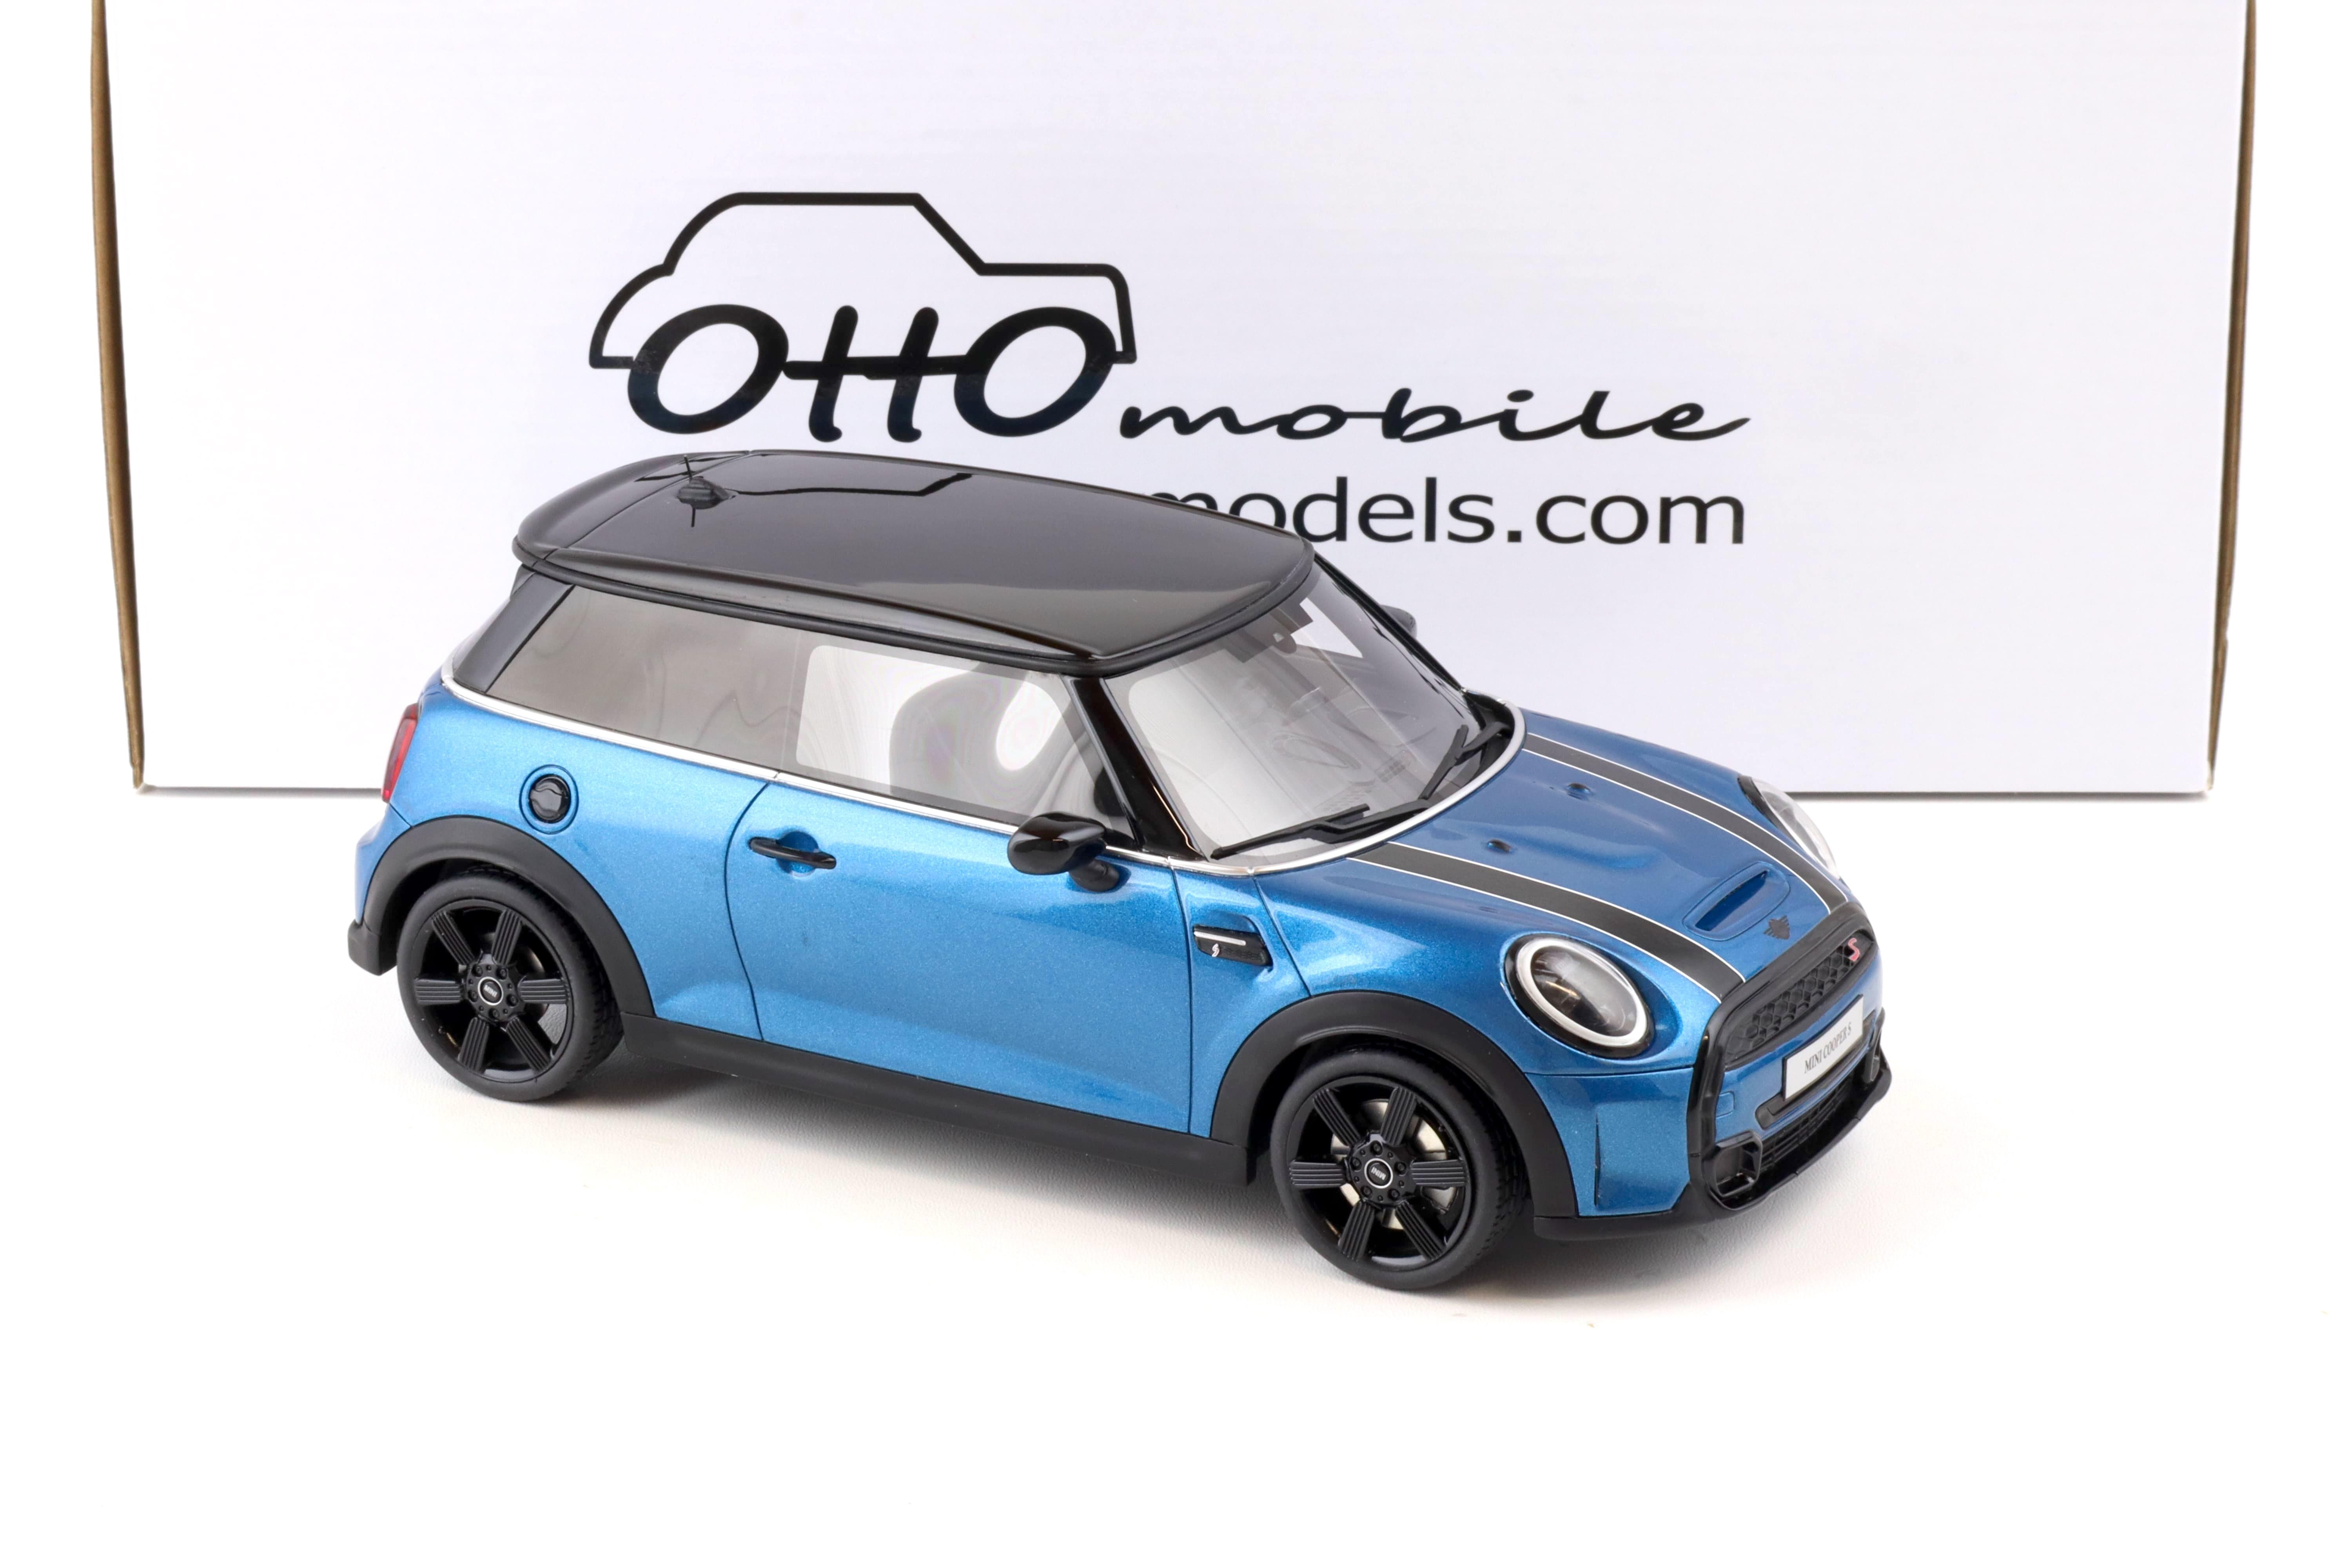 1:18 OTTO mobile OT982 Mini Cooper S blue metallic/ black 2021